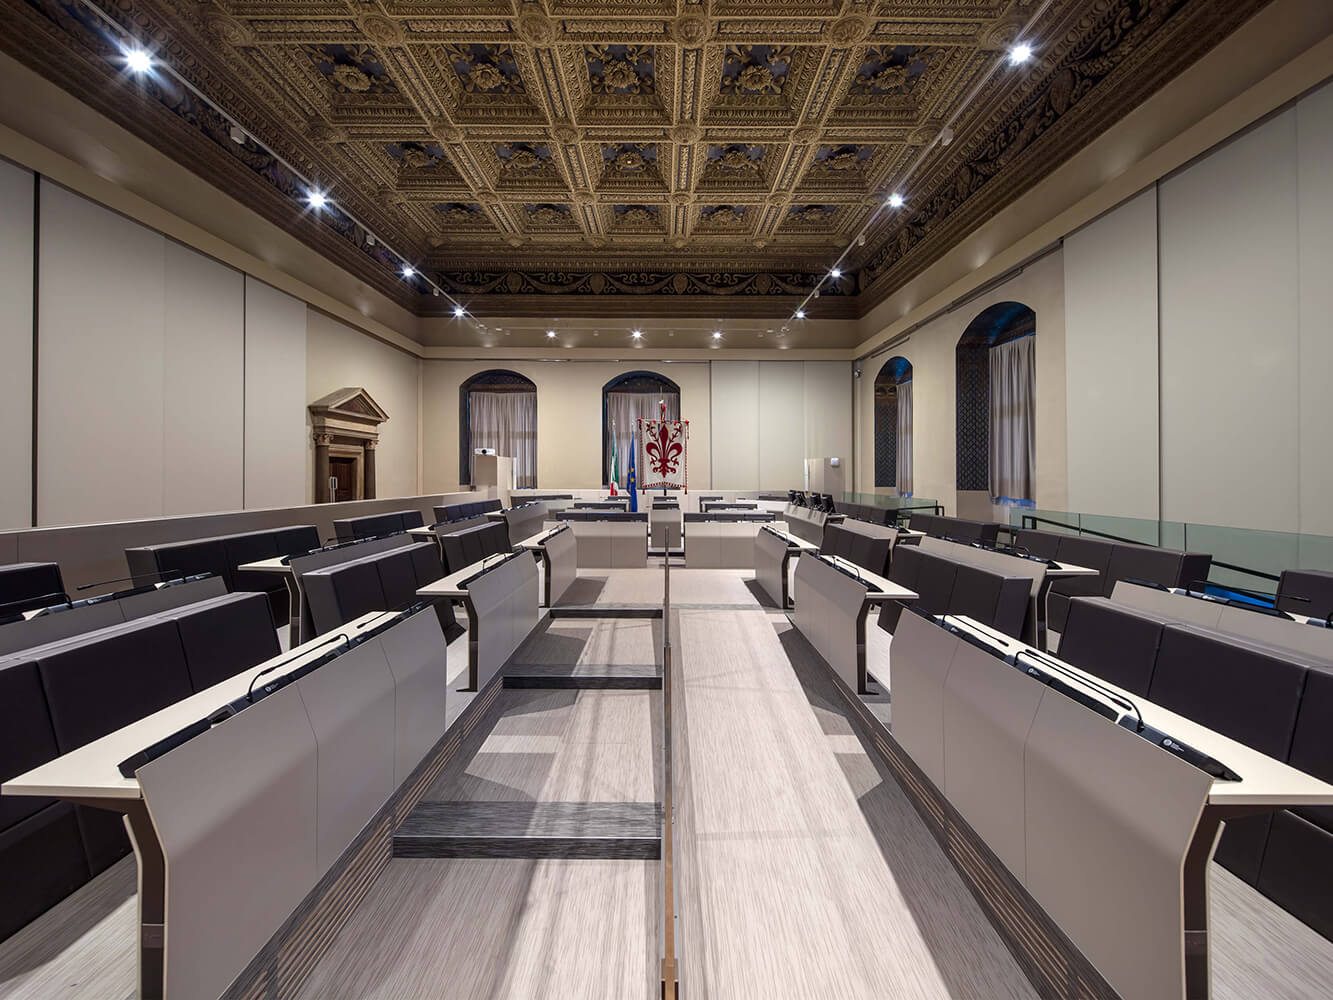 Sala dei Duecento in Palazzo Vecchio – Florence, Italy